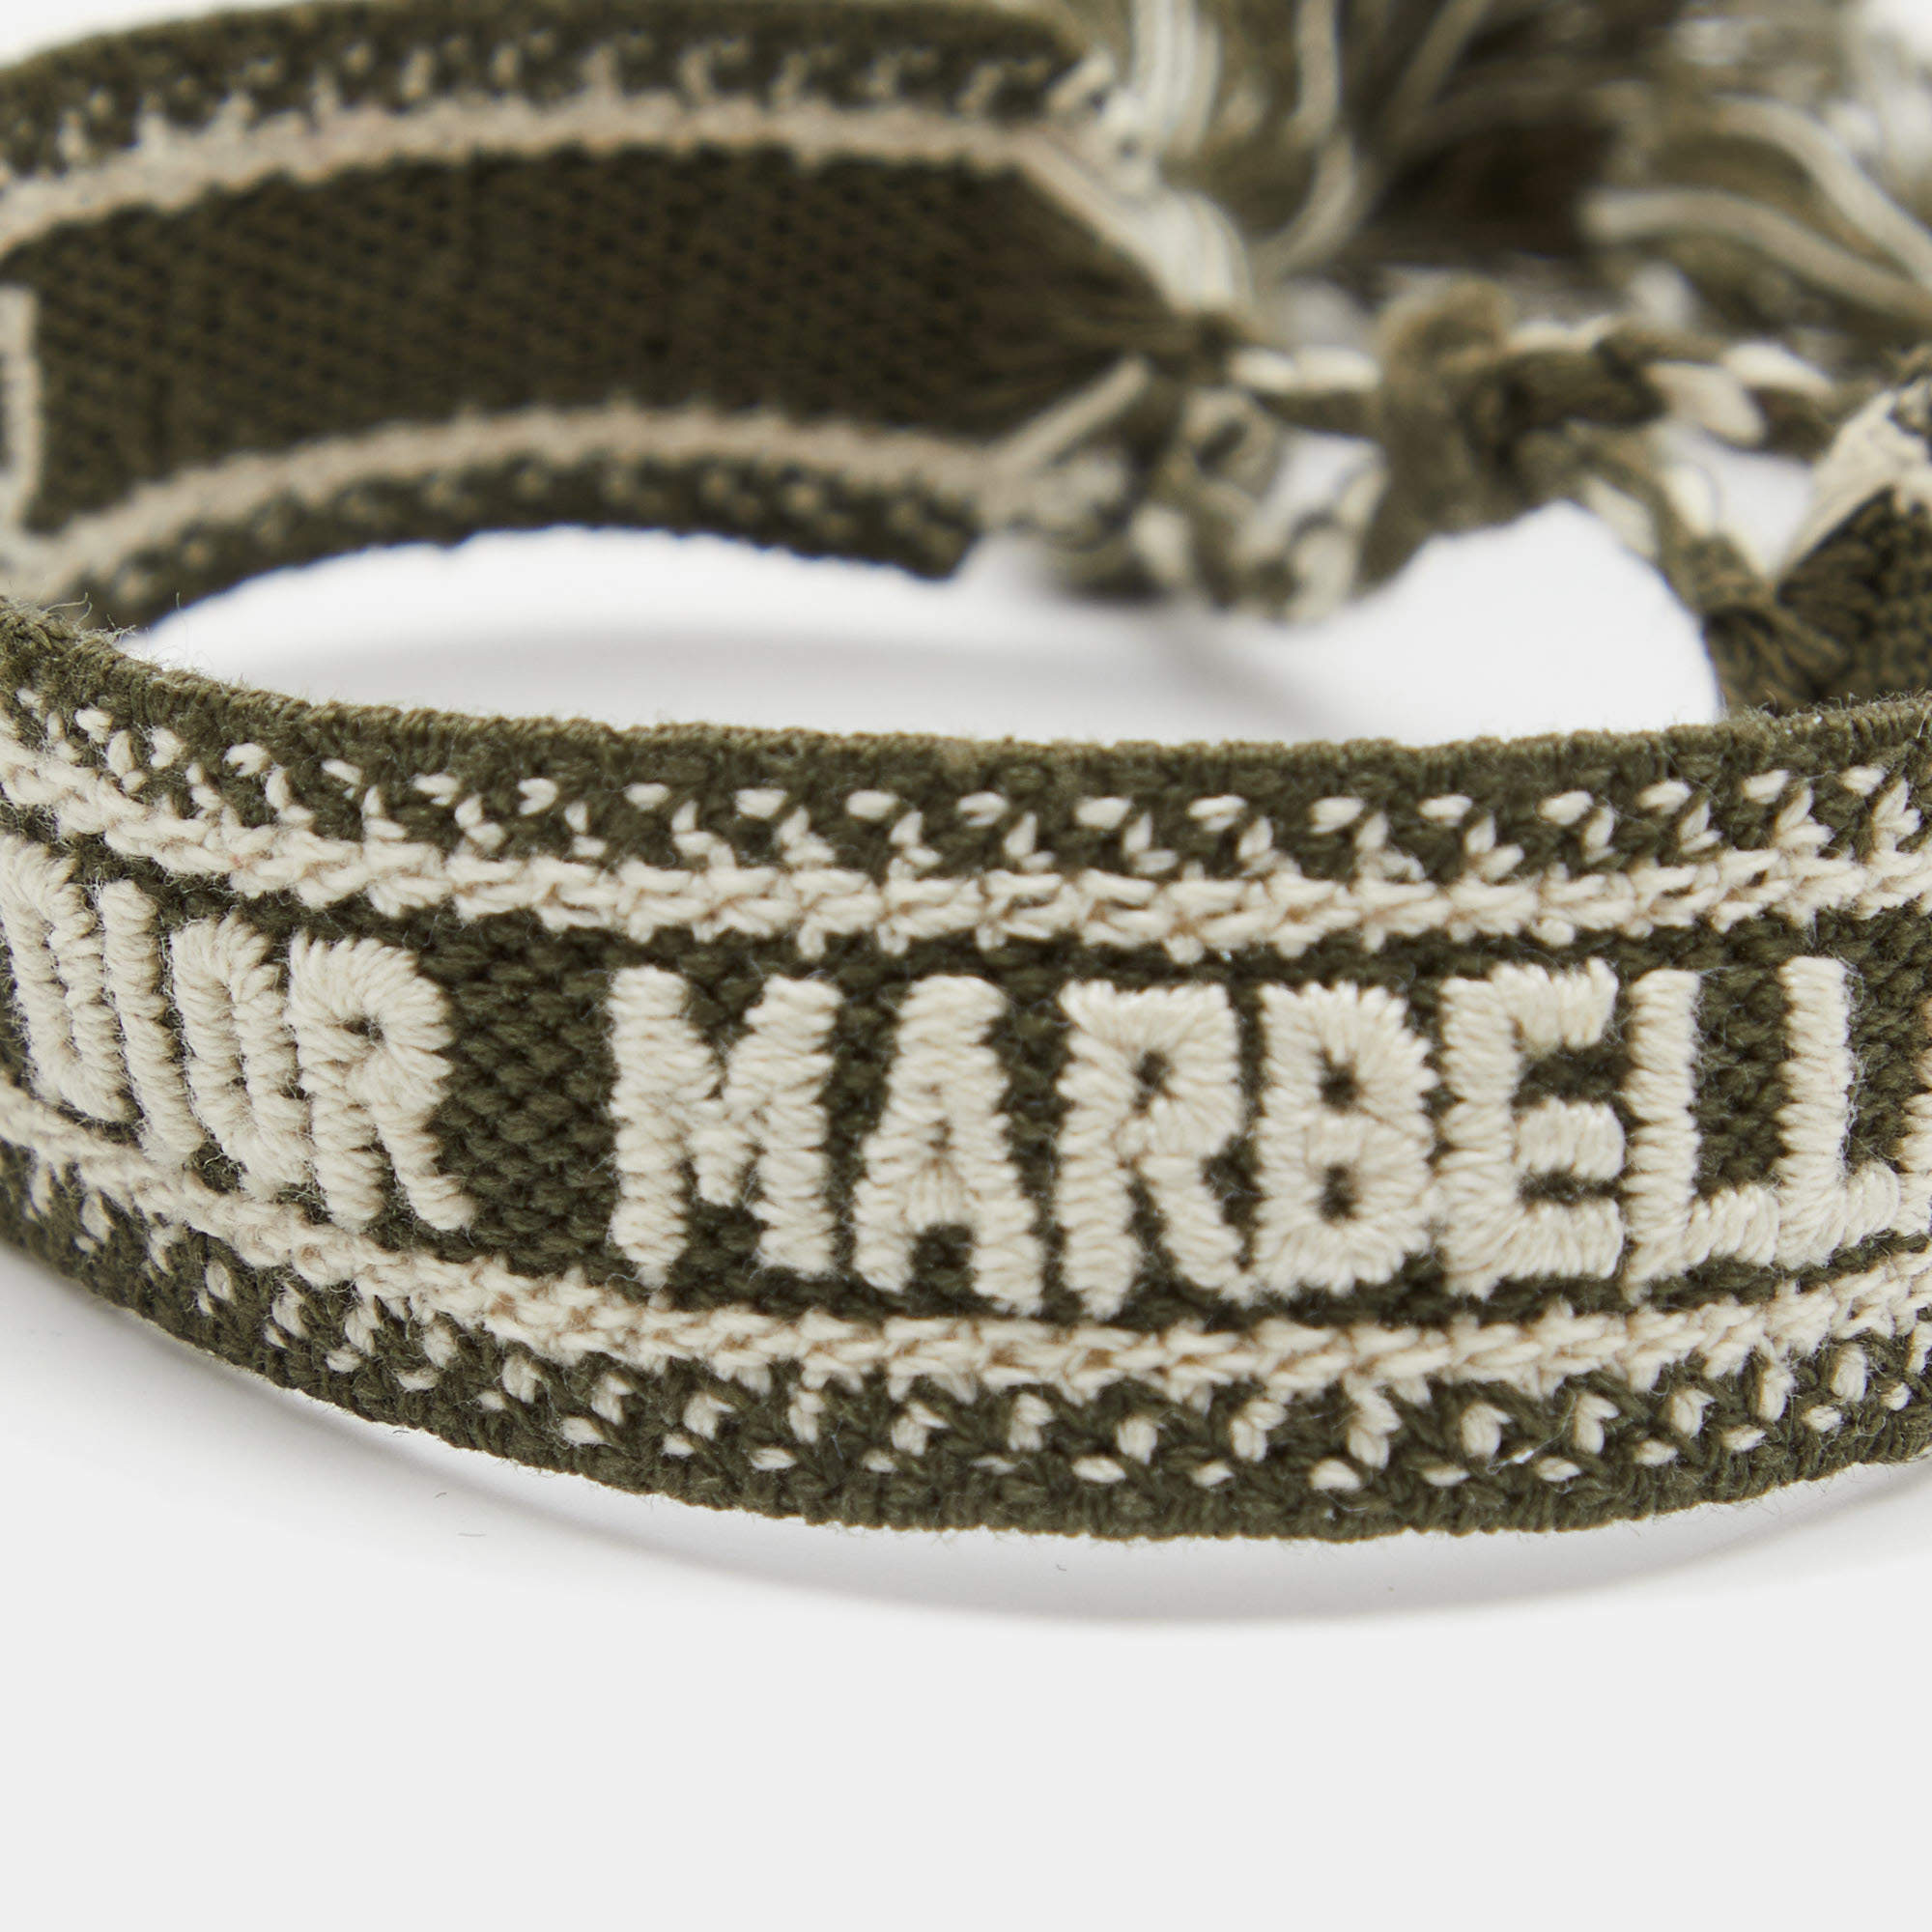 Dior Burgundy & Green J'adior Marbella Friendship Bracelets Set of